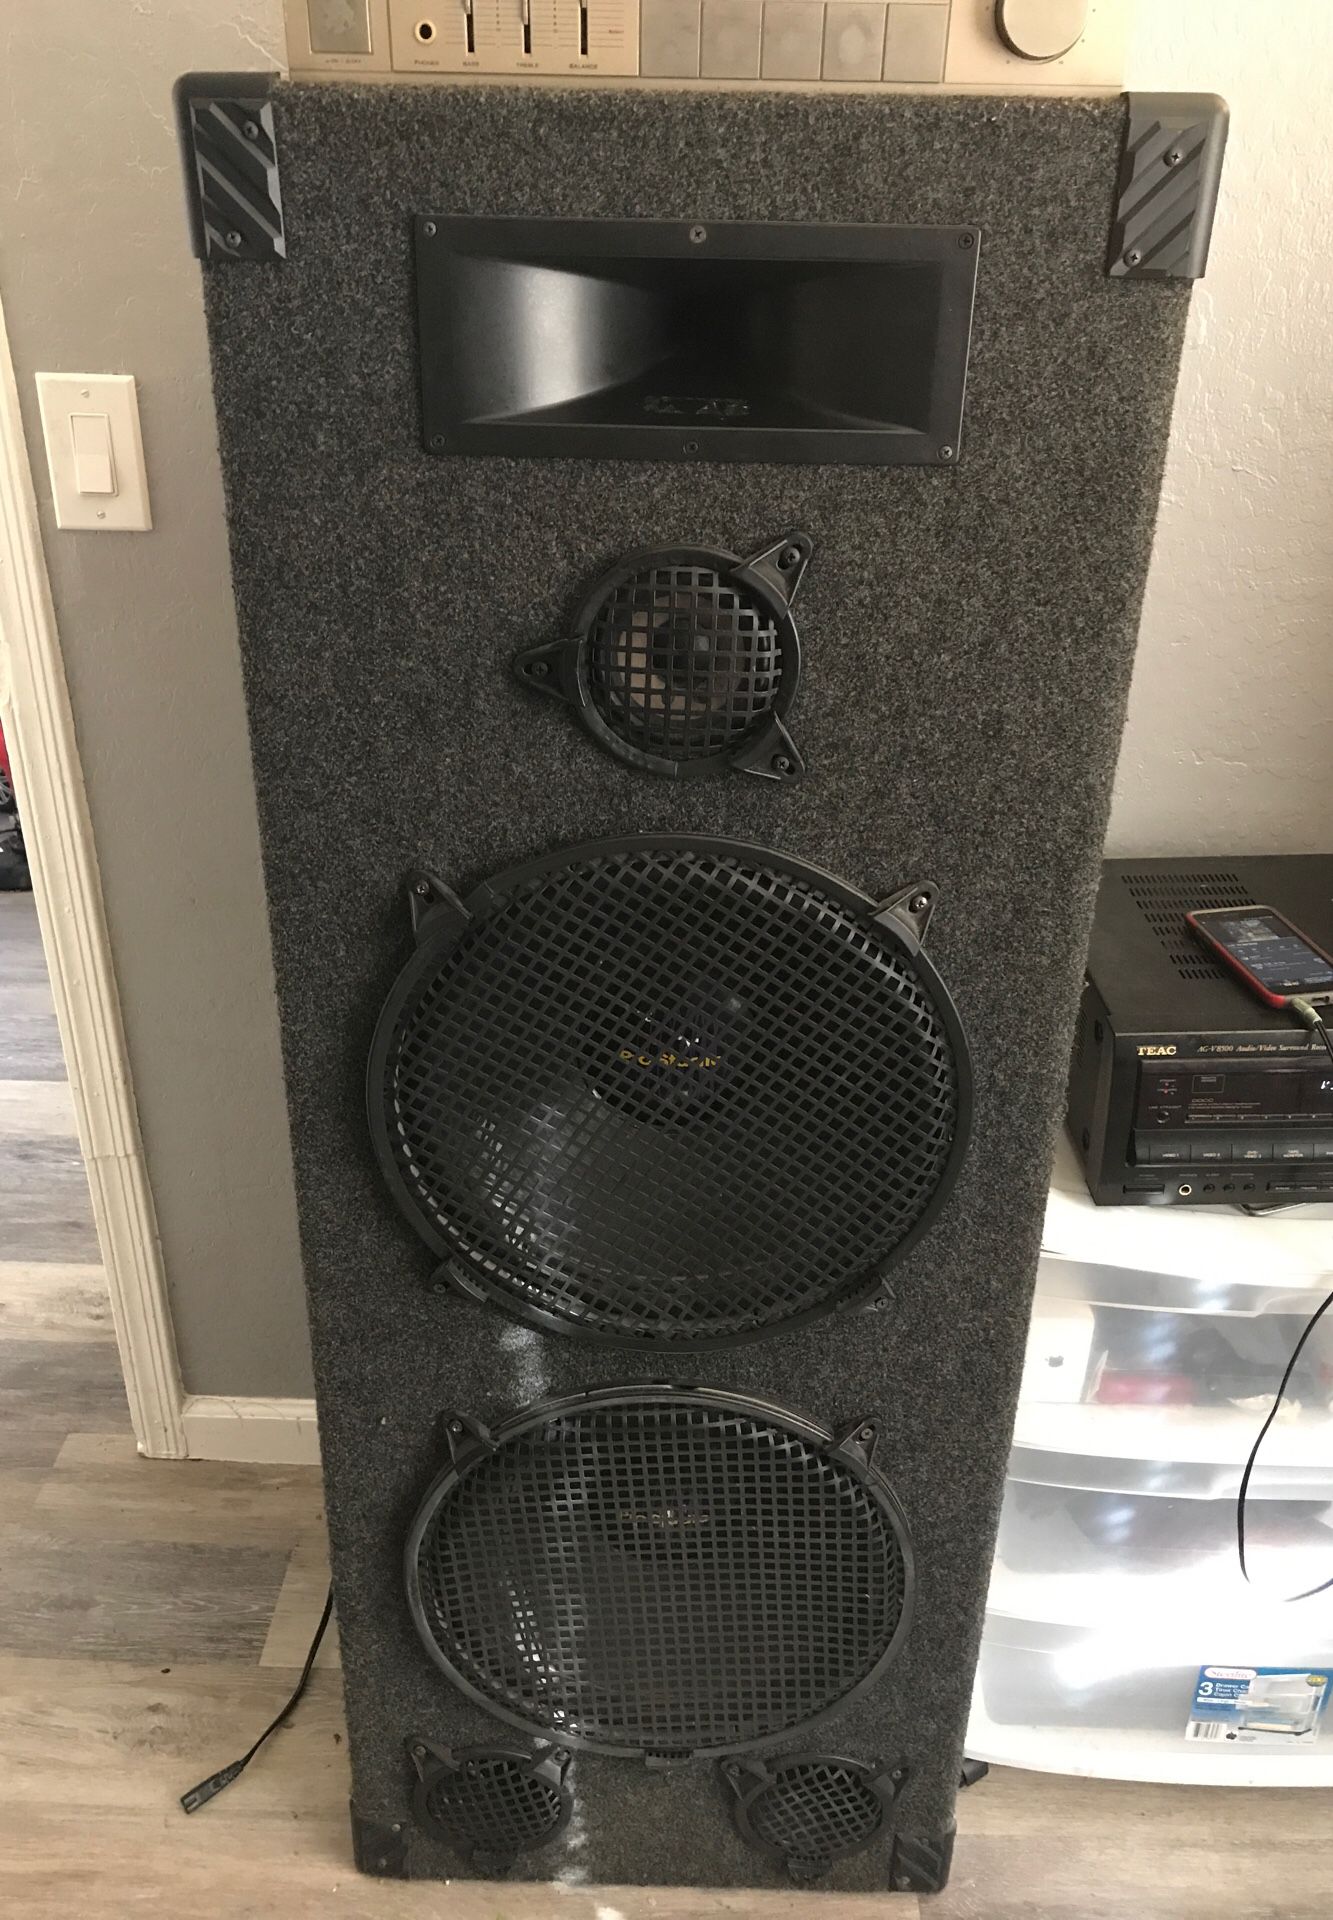 2 Pro Studio dual 15” tower speakers model ps230